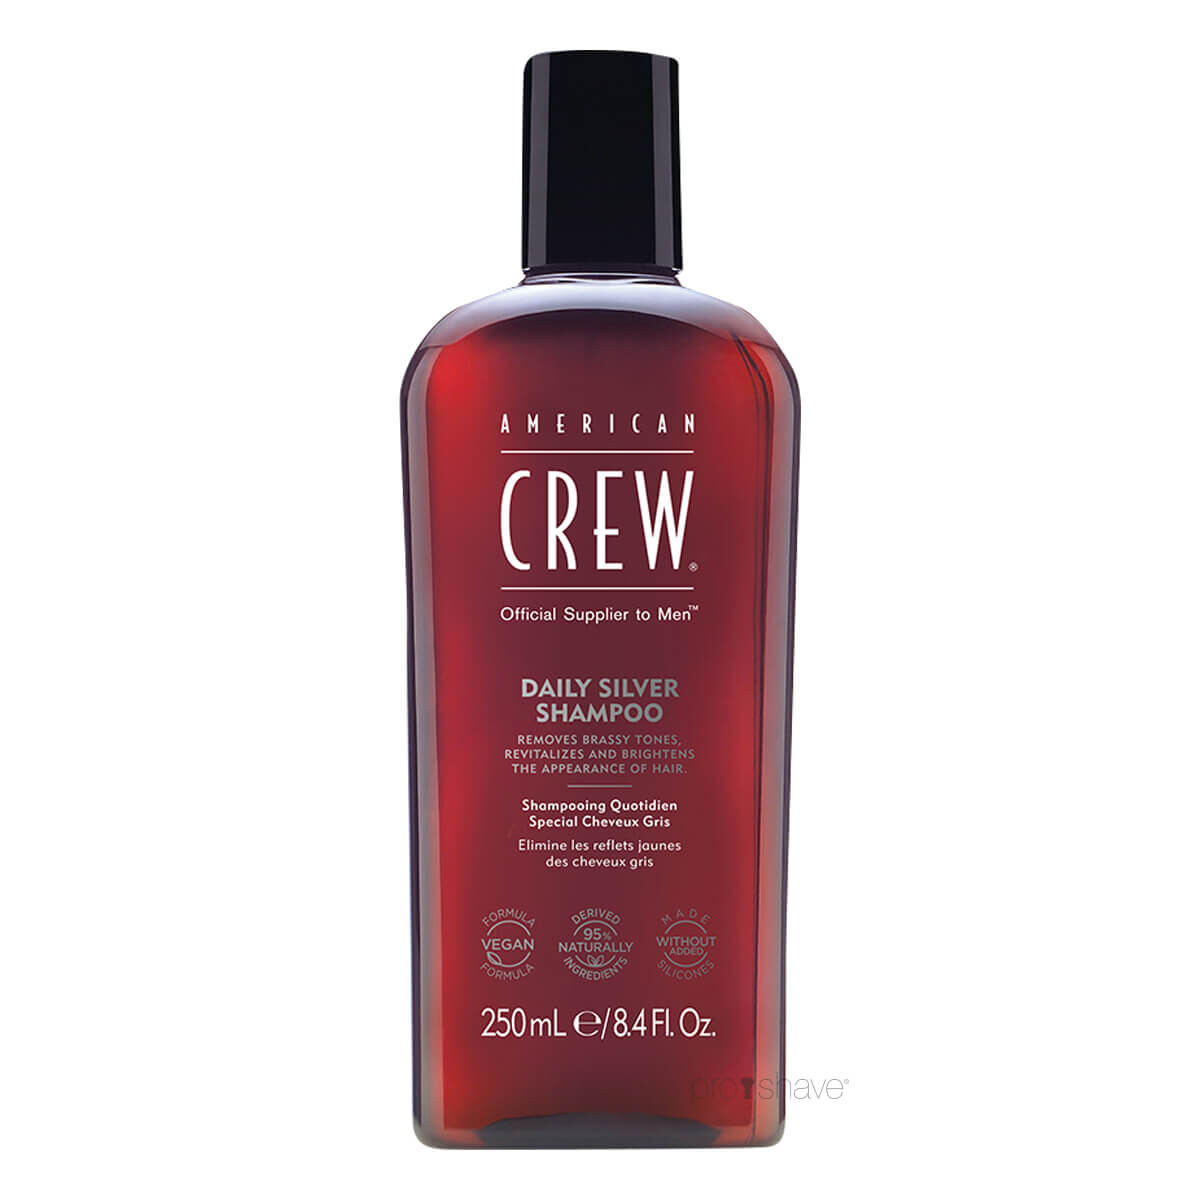 6: American Crew Daily Silver Shampoo, 250 ml.